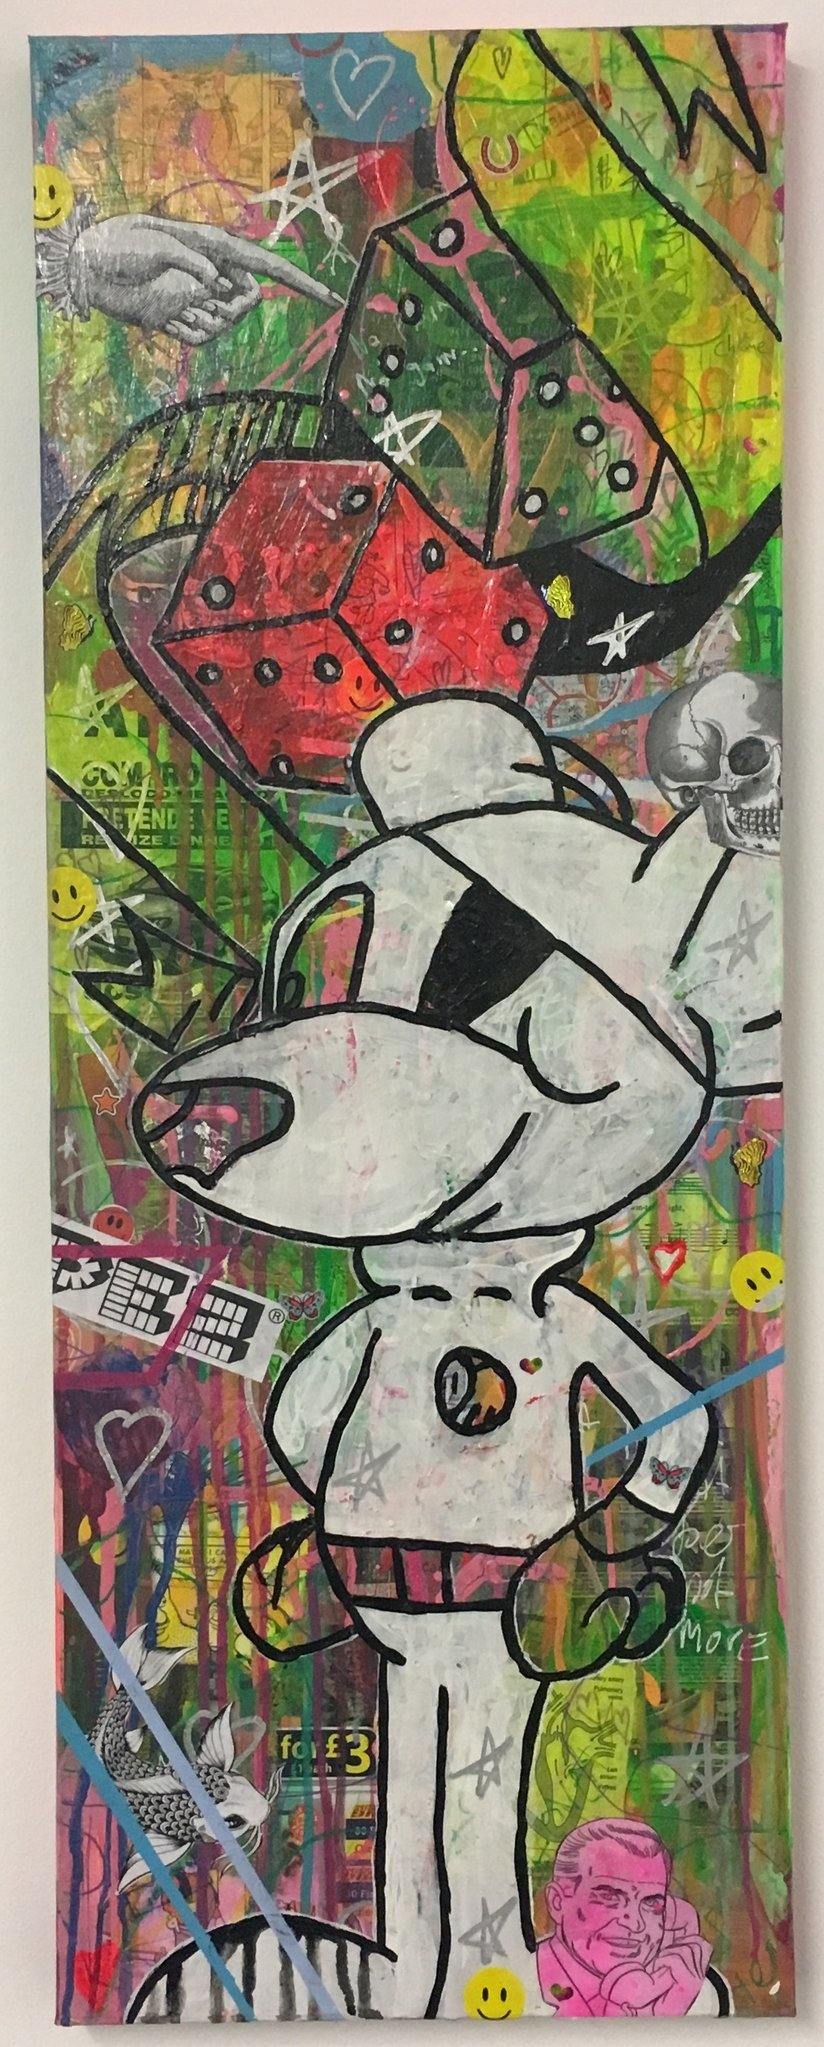 Stranger Danger by Barrie J Davies 2018, Mixed media on Canvas, 30cm x 80cm, Unframed. Barrie J Davies is an Artist - Pop Art and Street art inspired Artist based in Brighton England UK - Pop Art Paintings, Street Art Prints & Editions available.